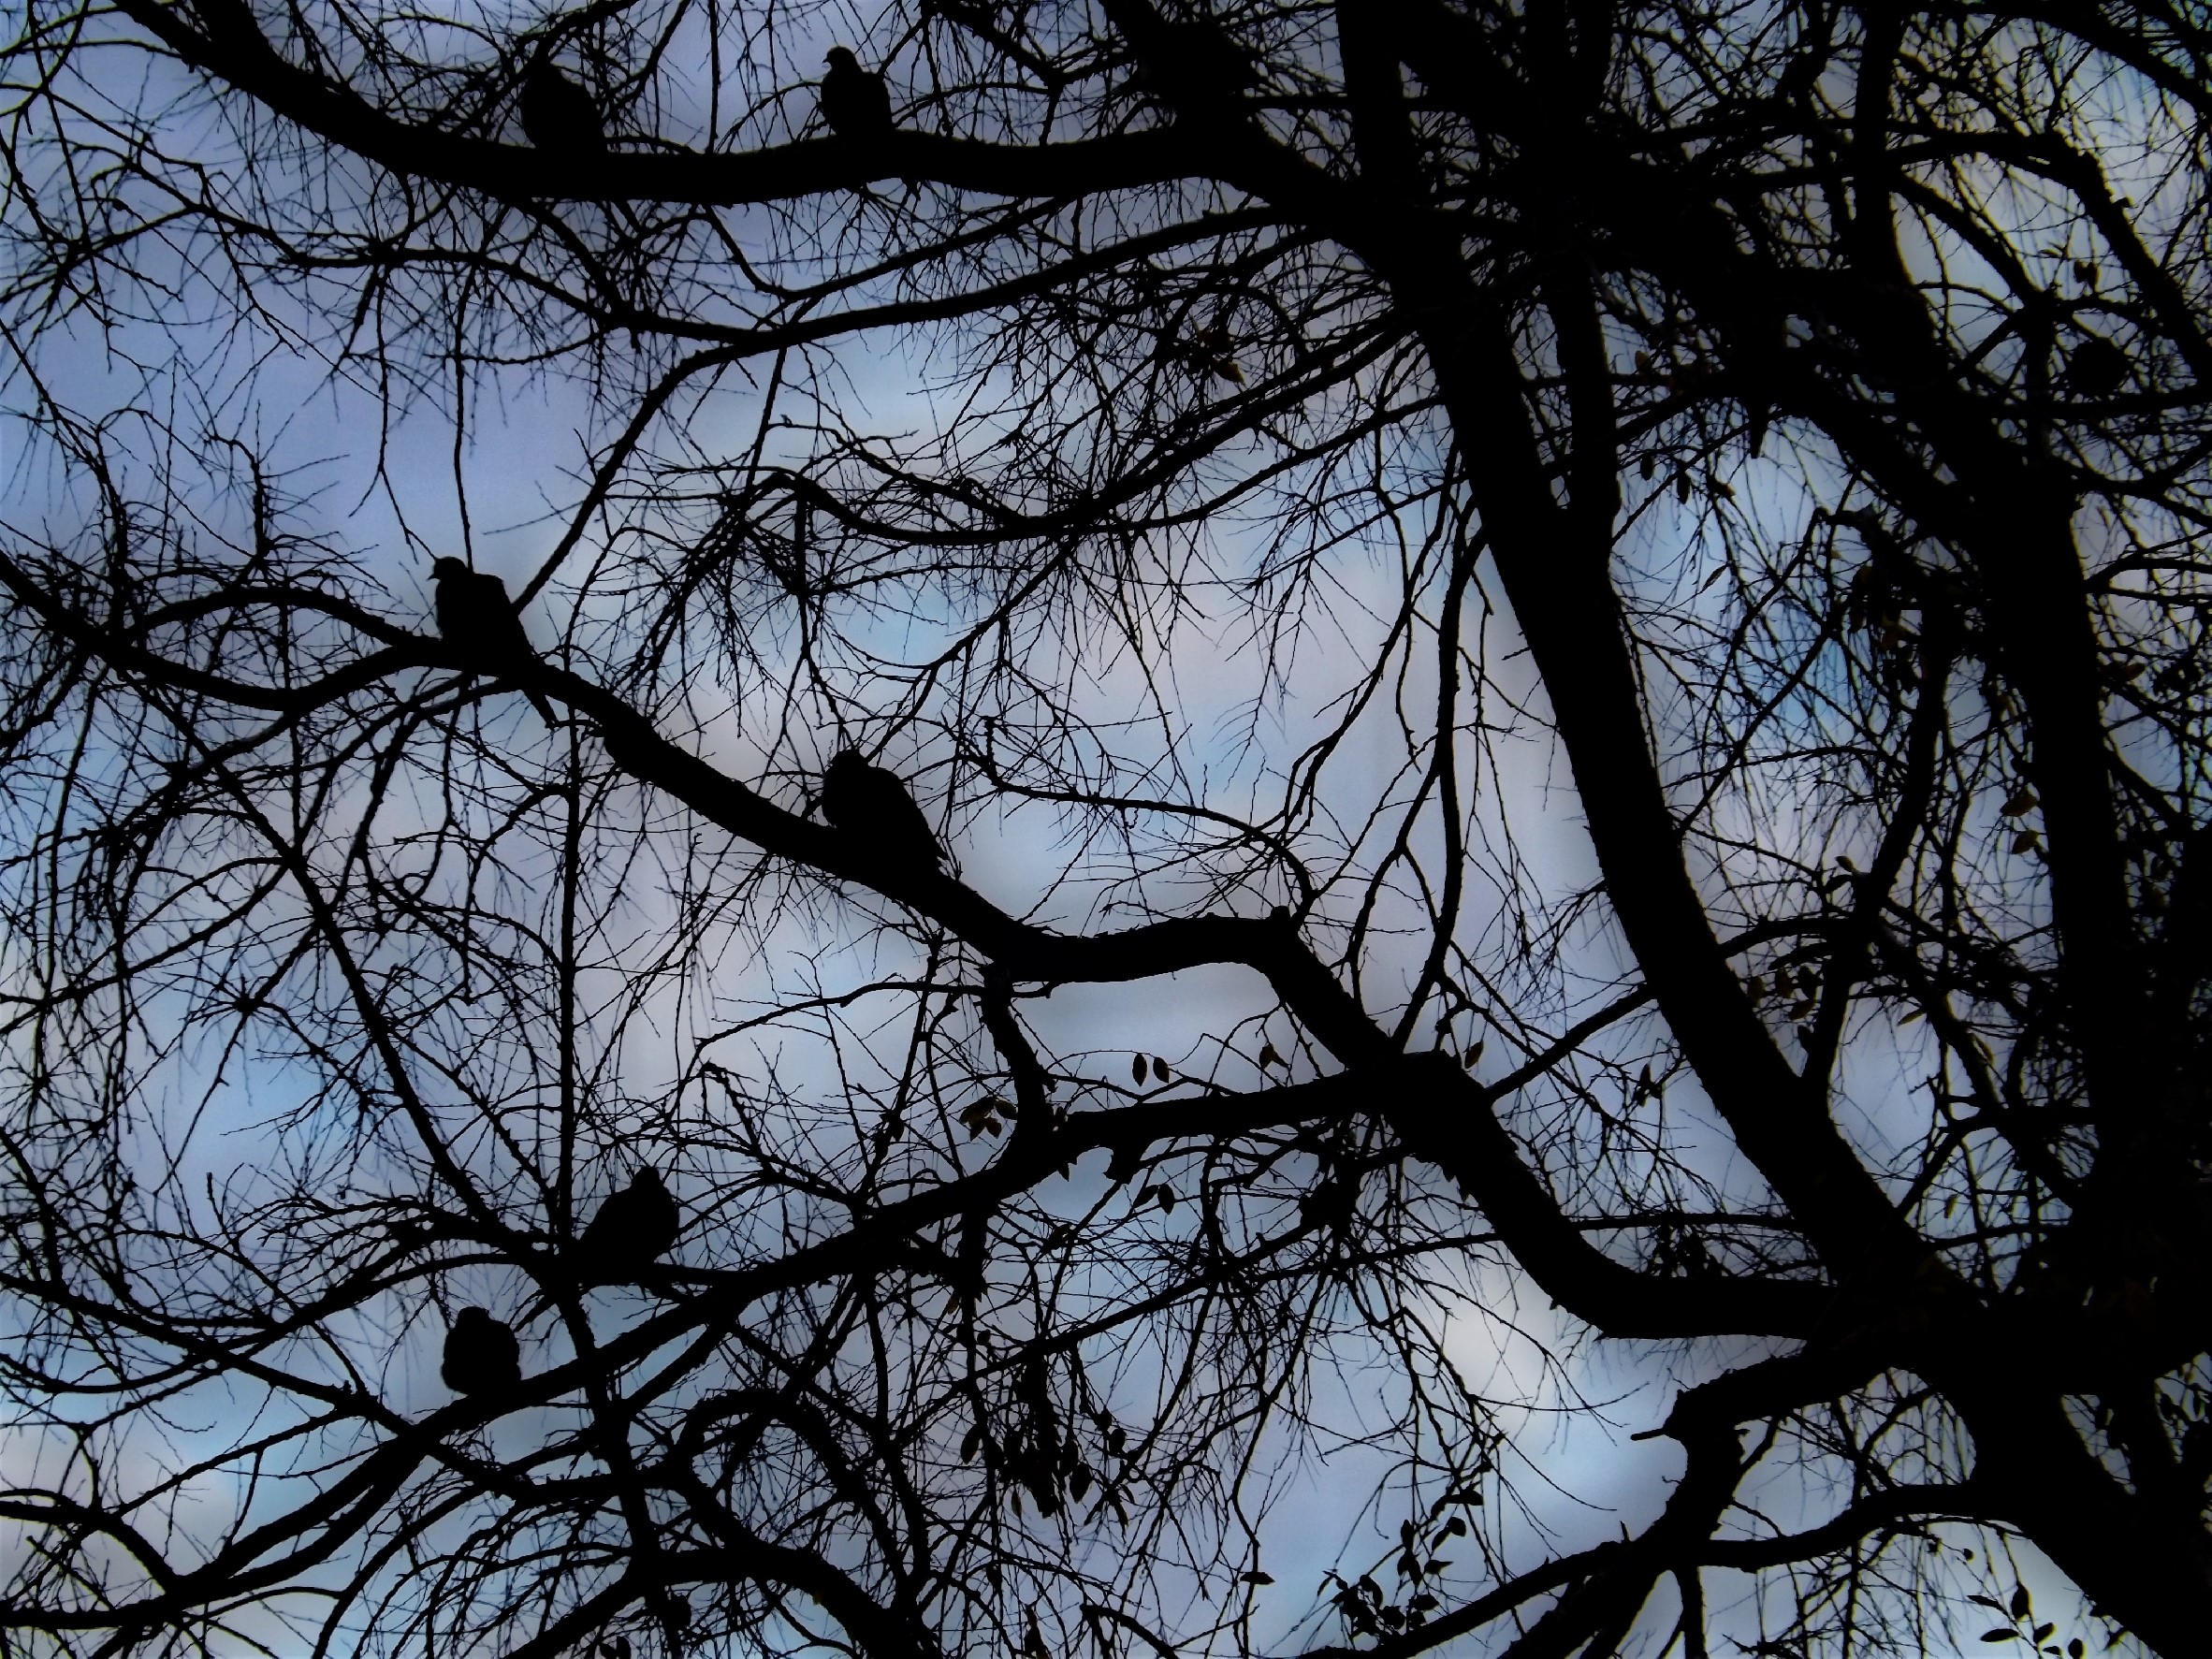 tree-birds